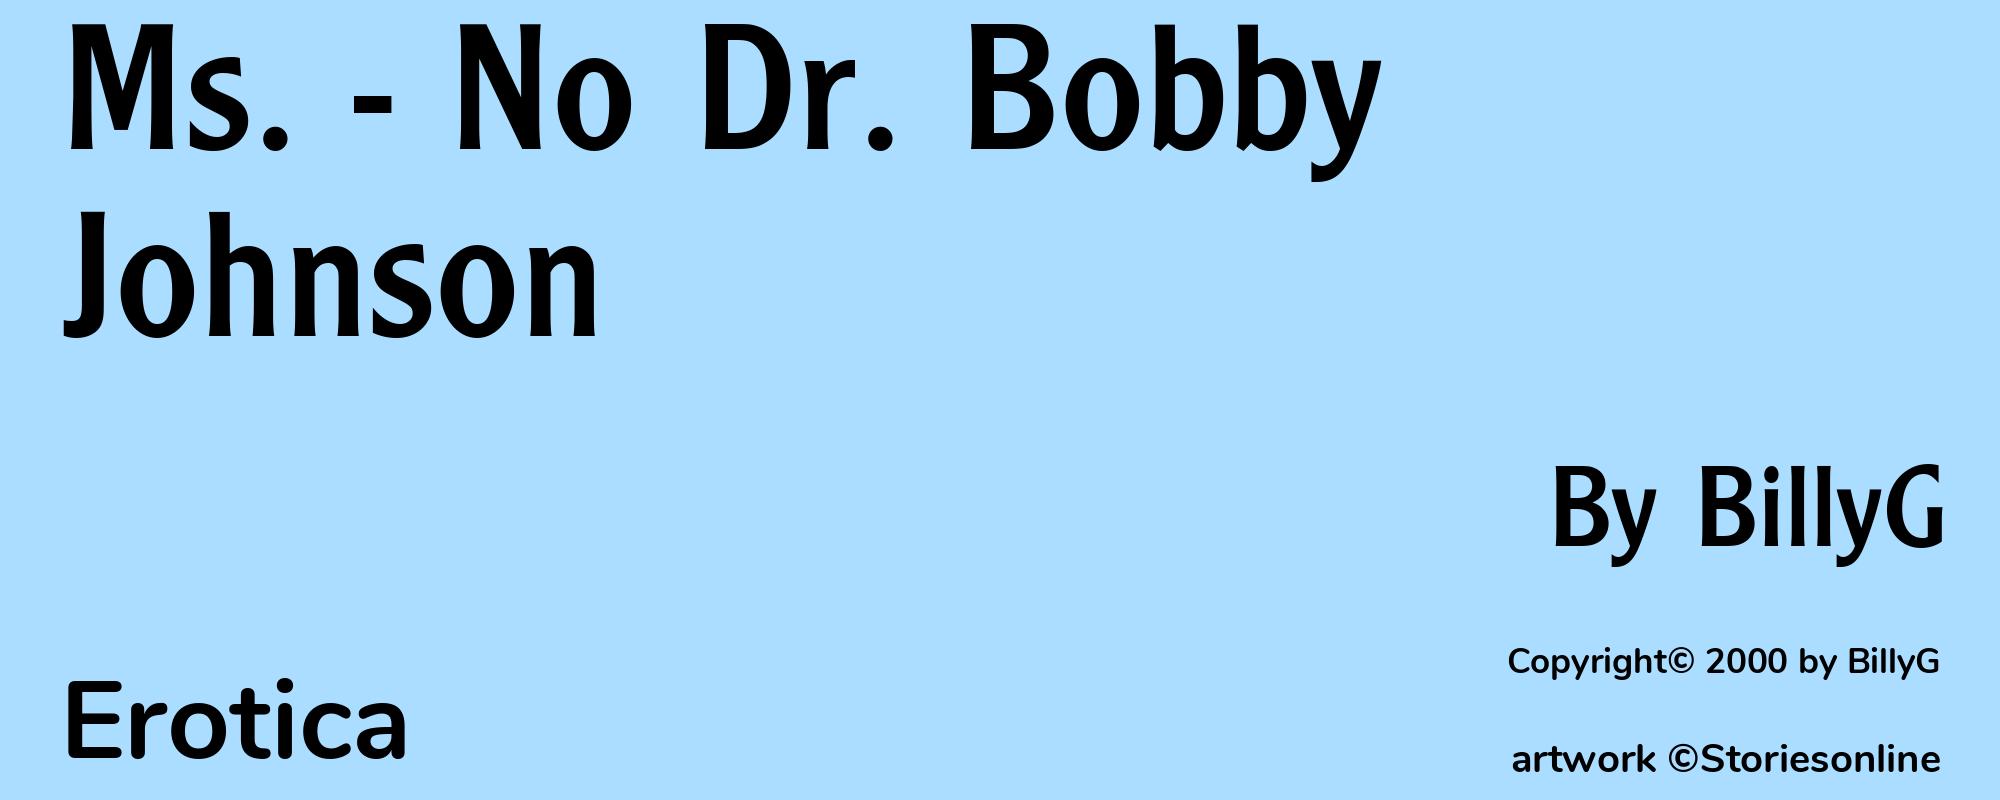 Ms. - No Dr. Bobby Johnson - Cover